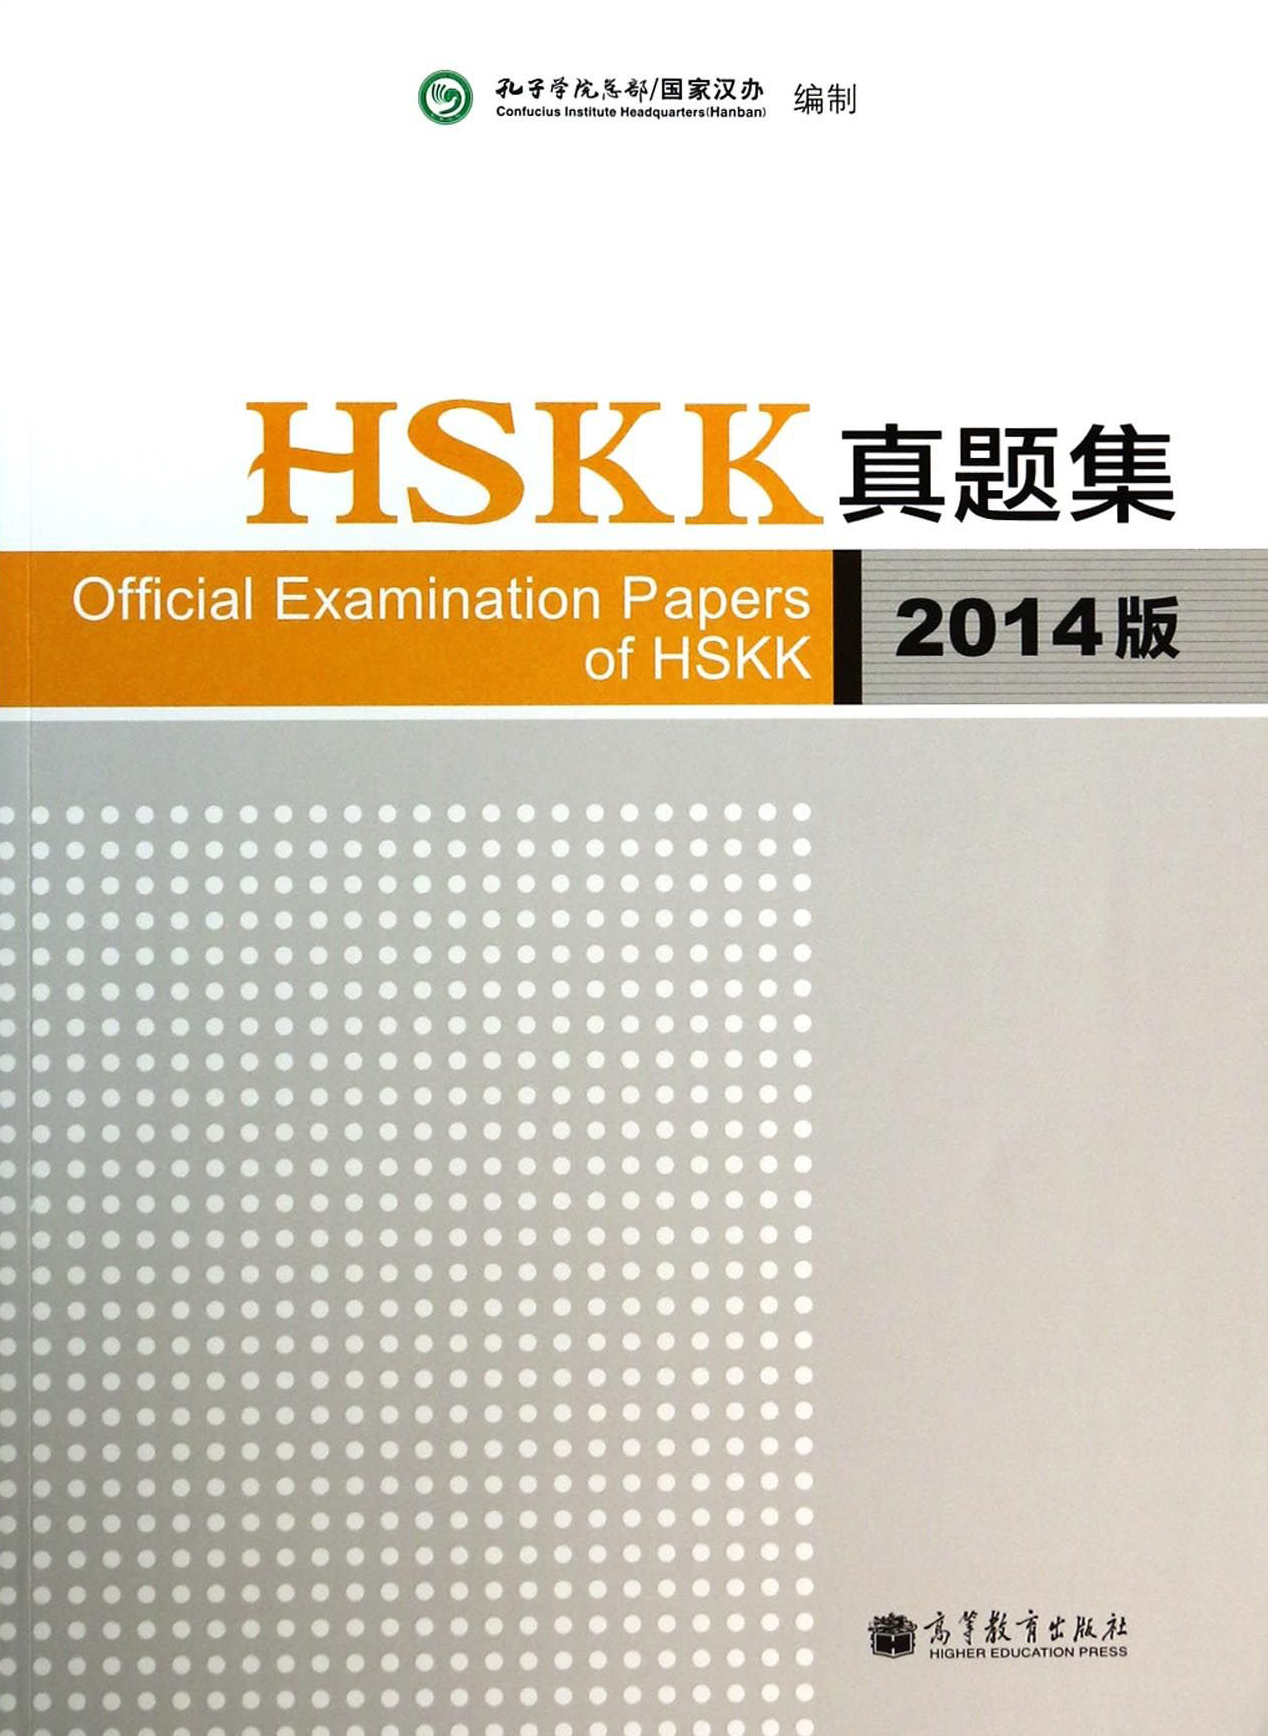 Official Examination Papers of HSKK (2014) / Тесты